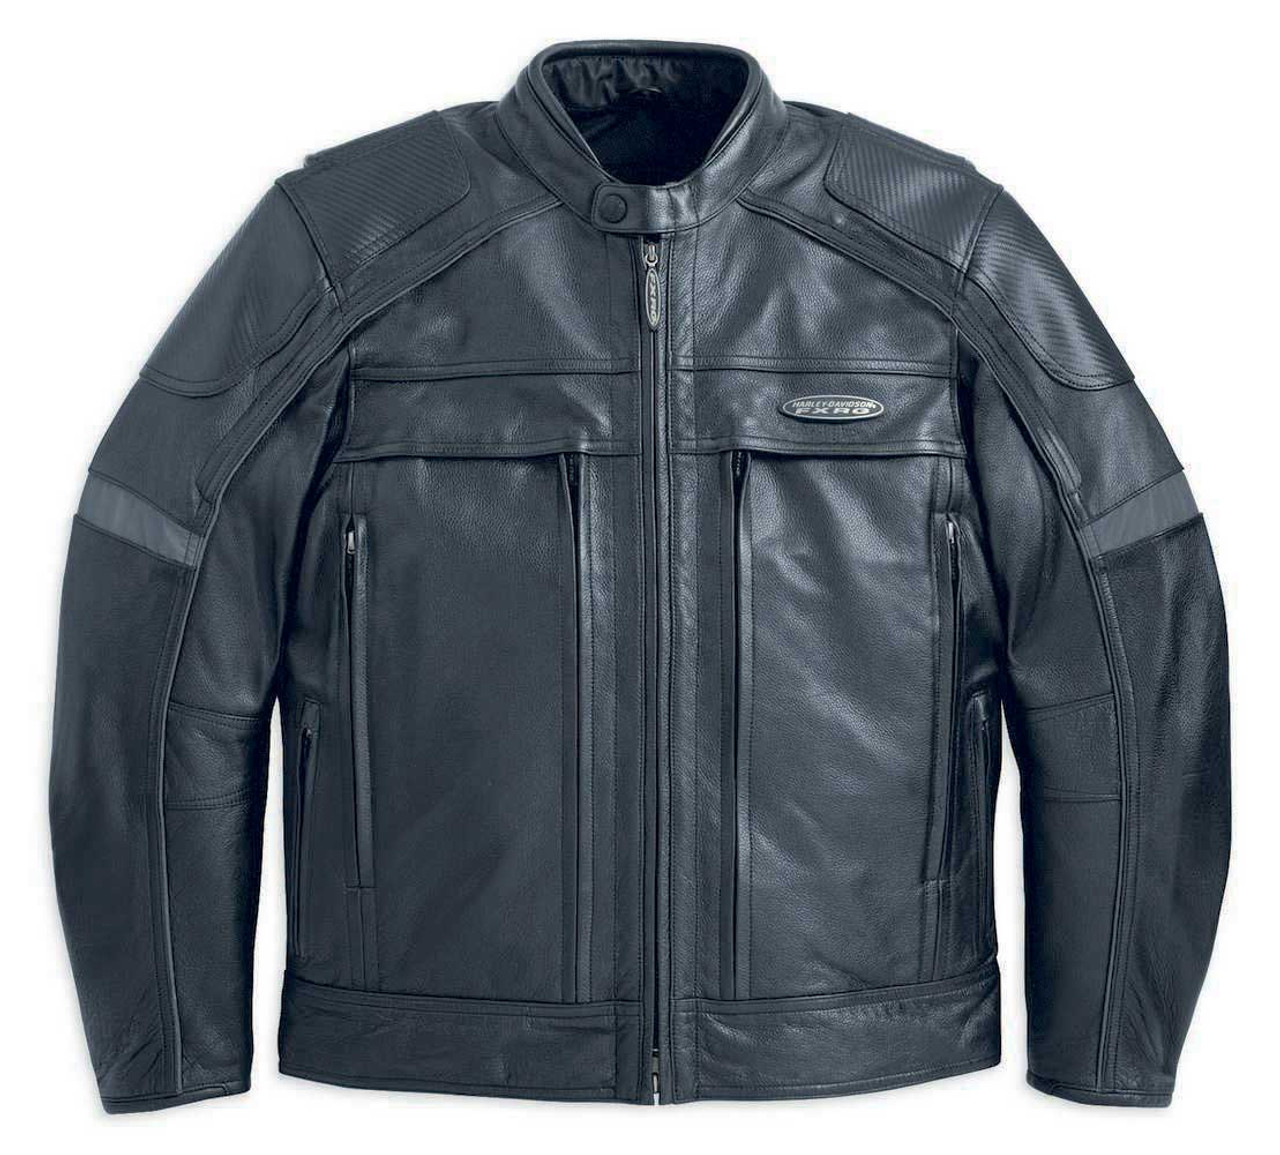 FXRG Harley leather jacket for sale